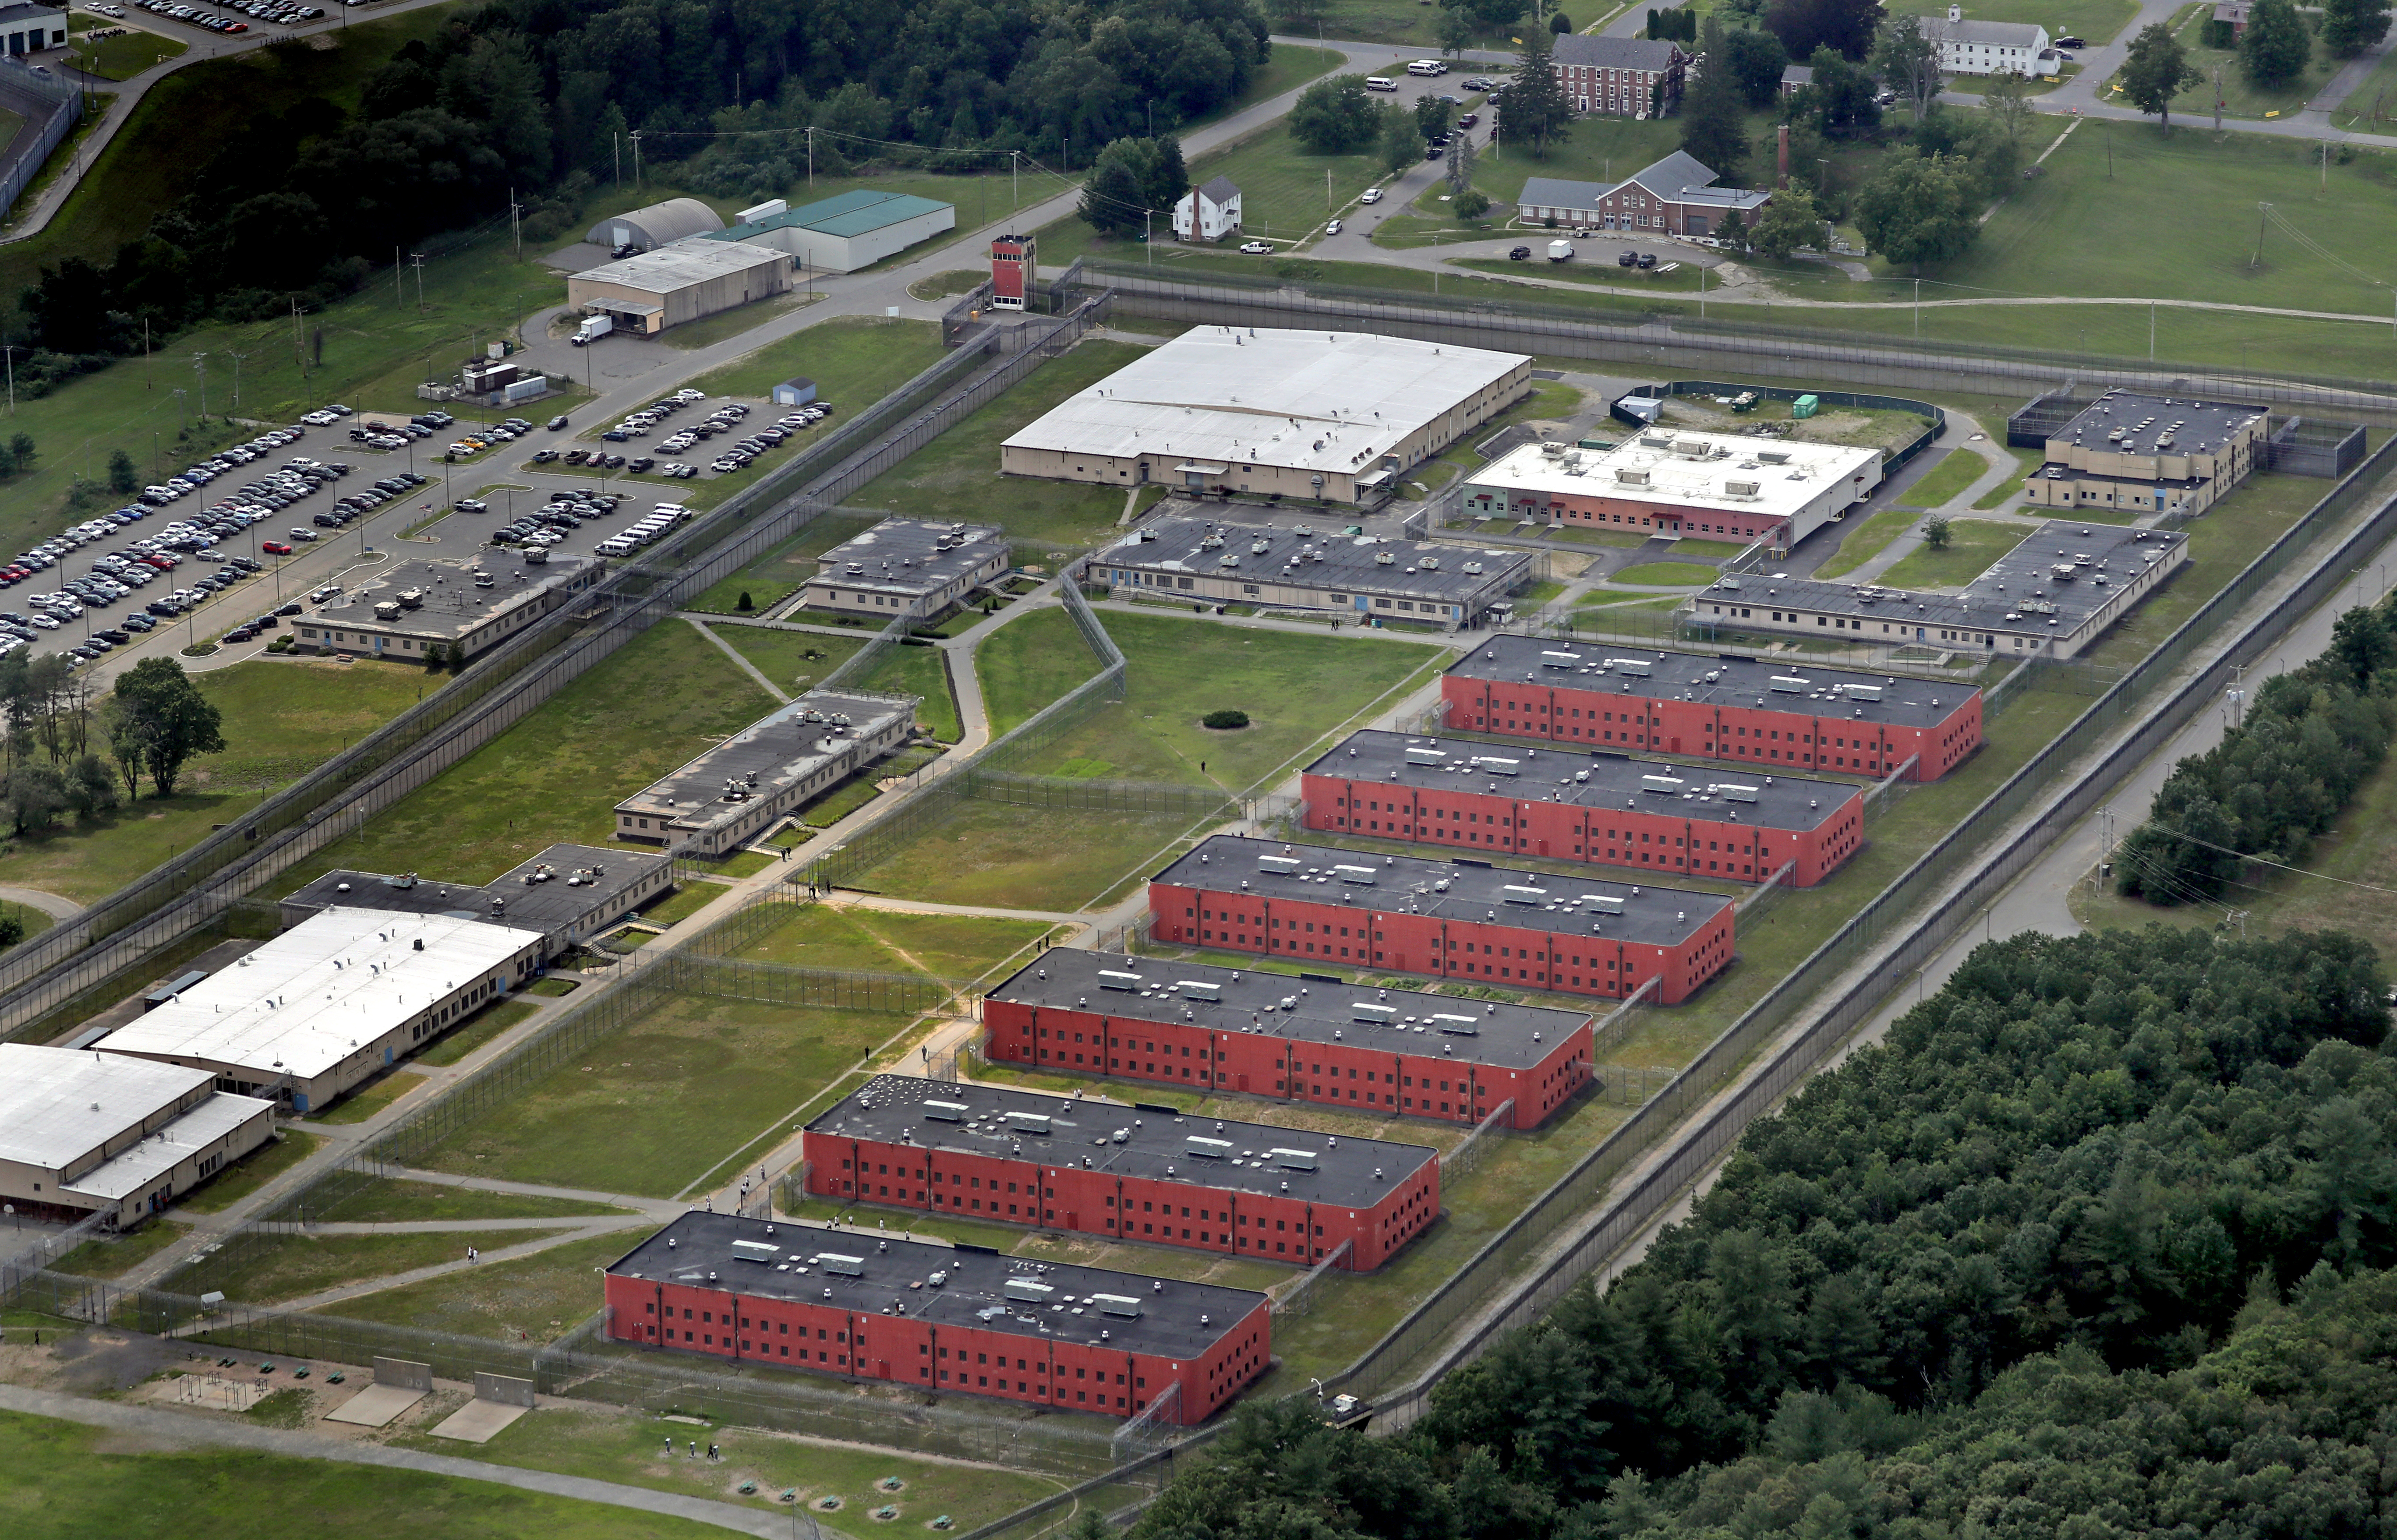 151002001035-cnnmoney-schools-prisons-exlarge-169.jpg